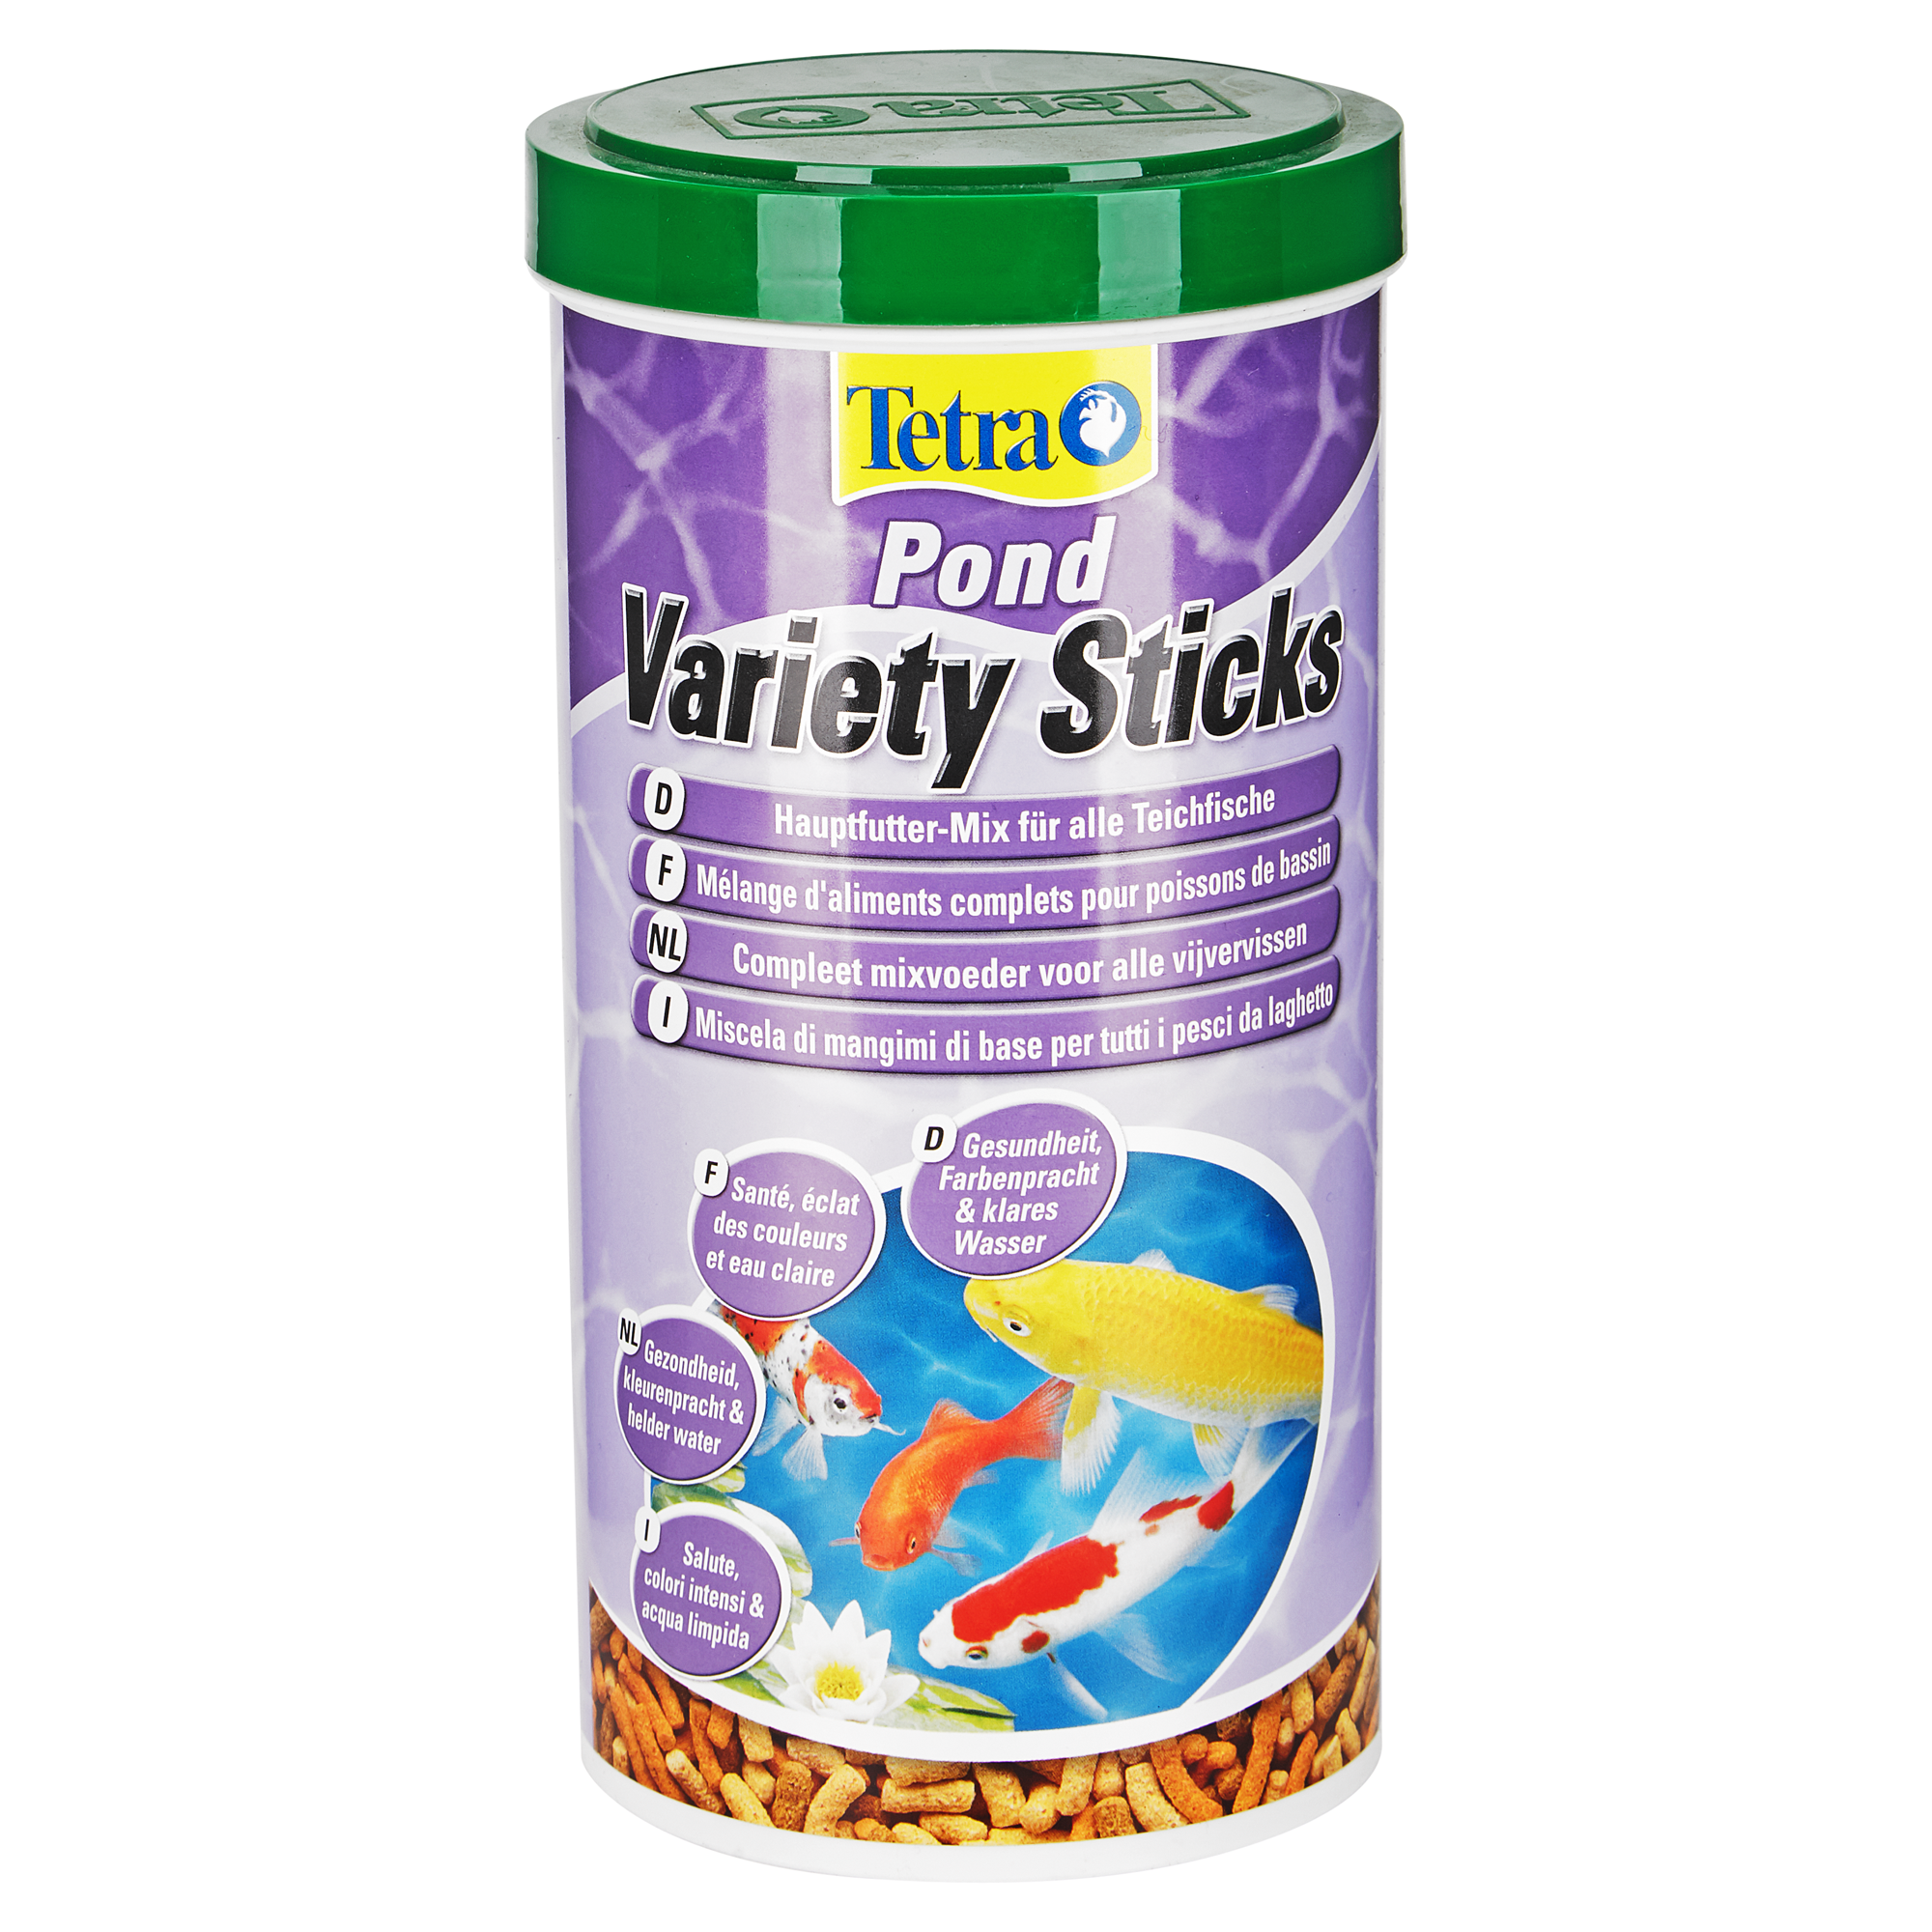 Fischfutter "Pond" Variety Sticks 150 g + product picture